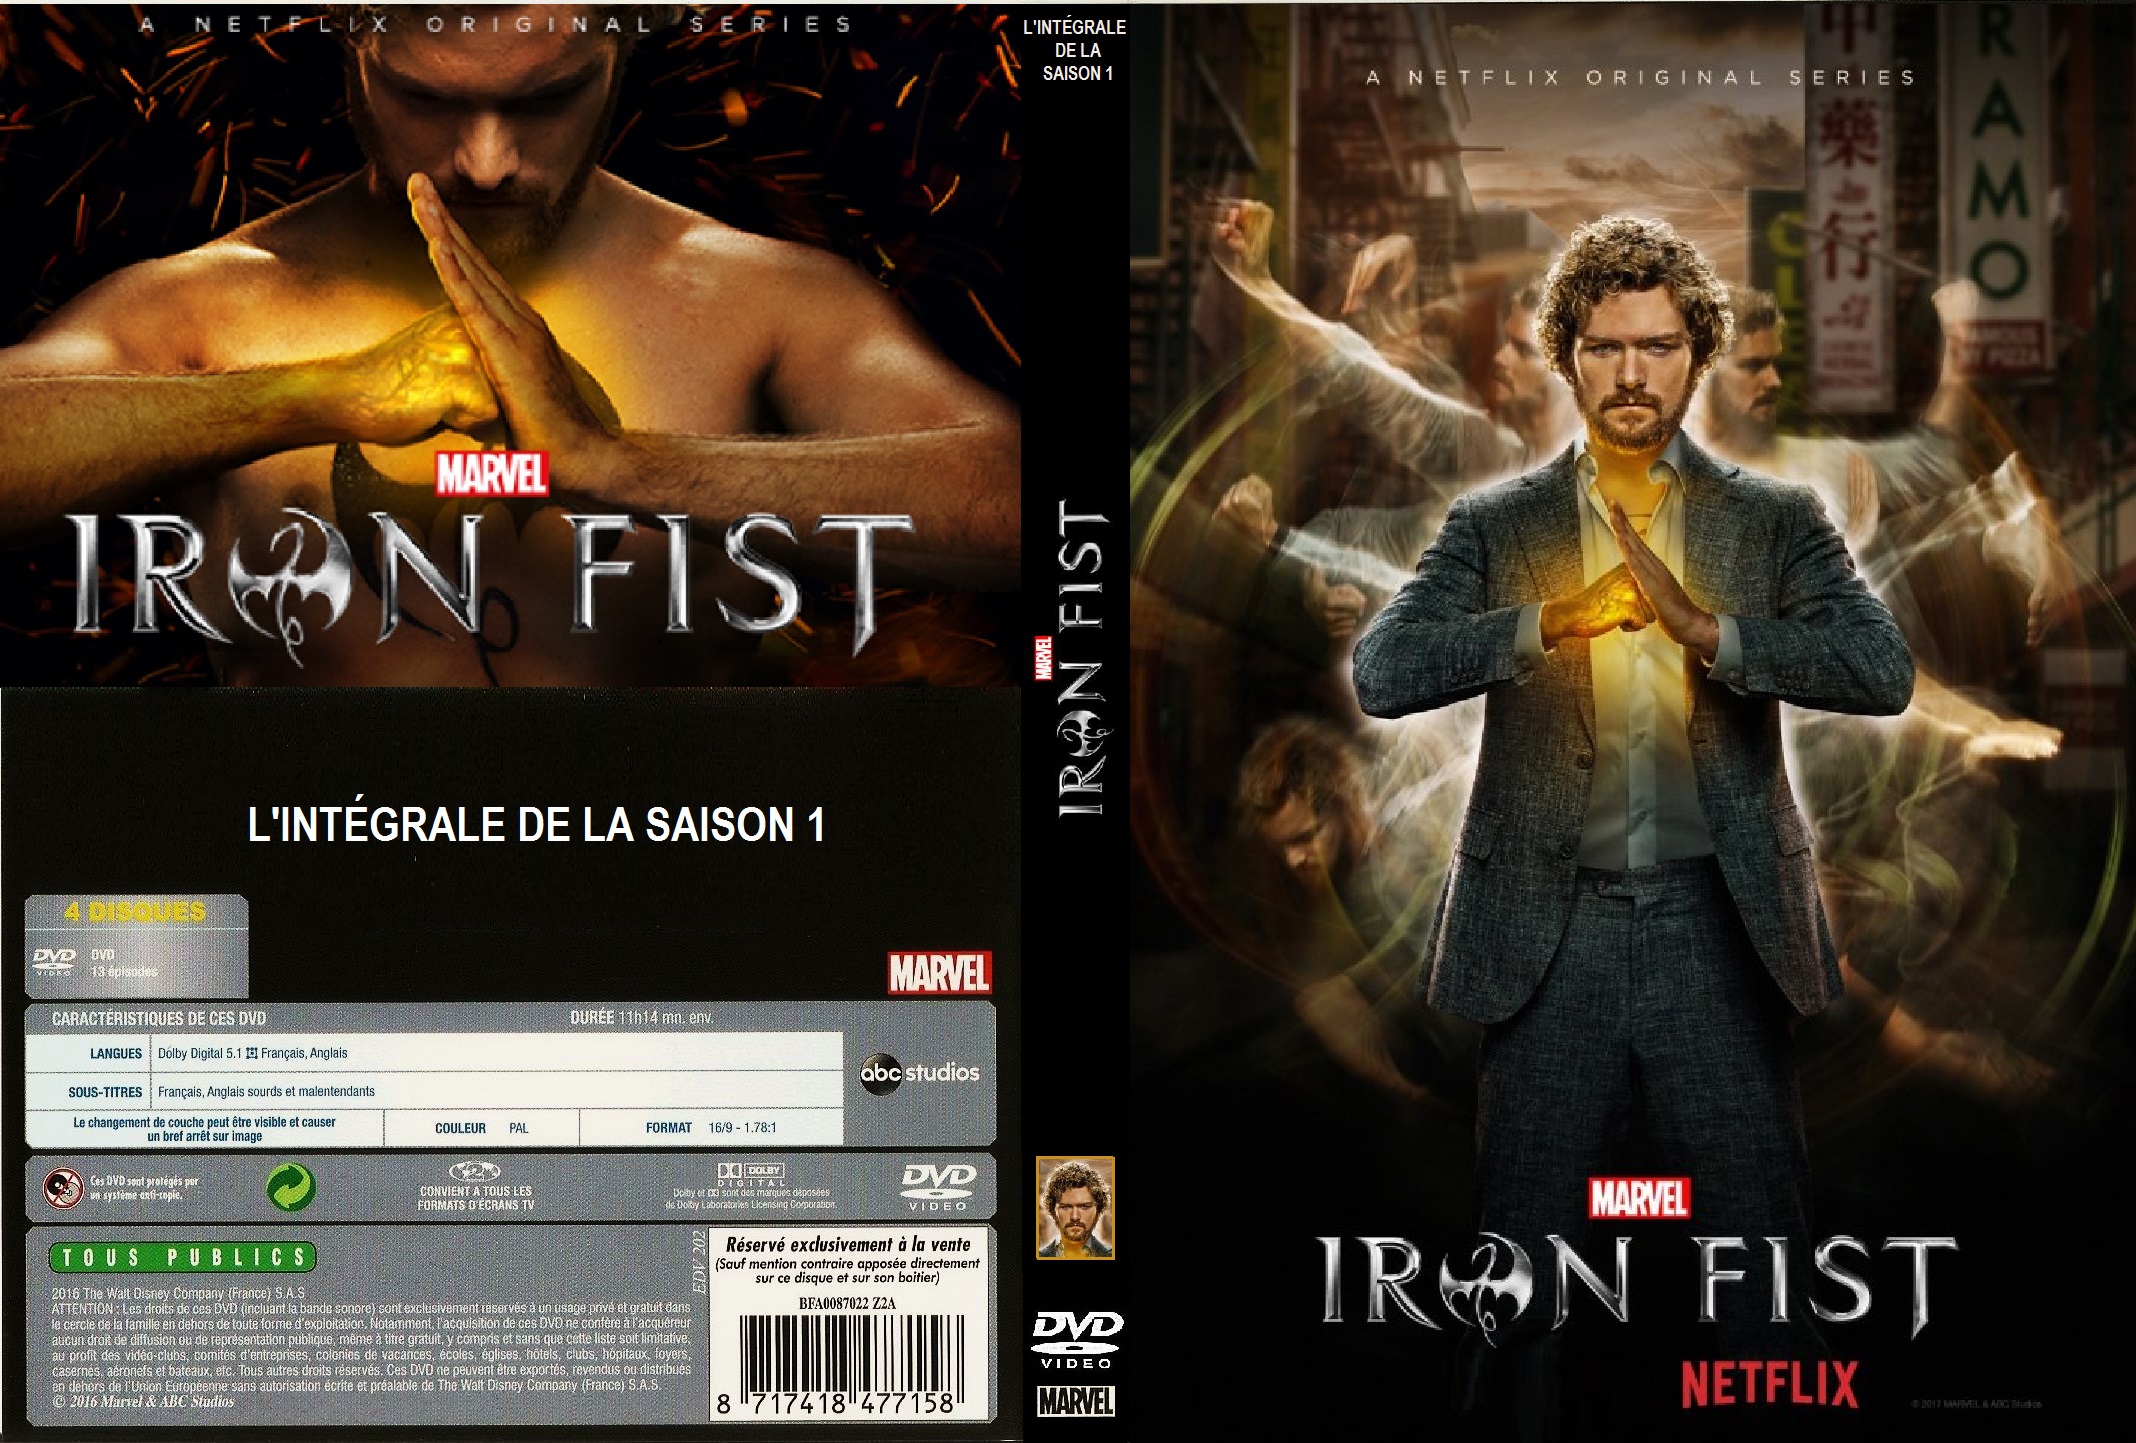 Jaquette DVD Iron Fist saison 1 custom